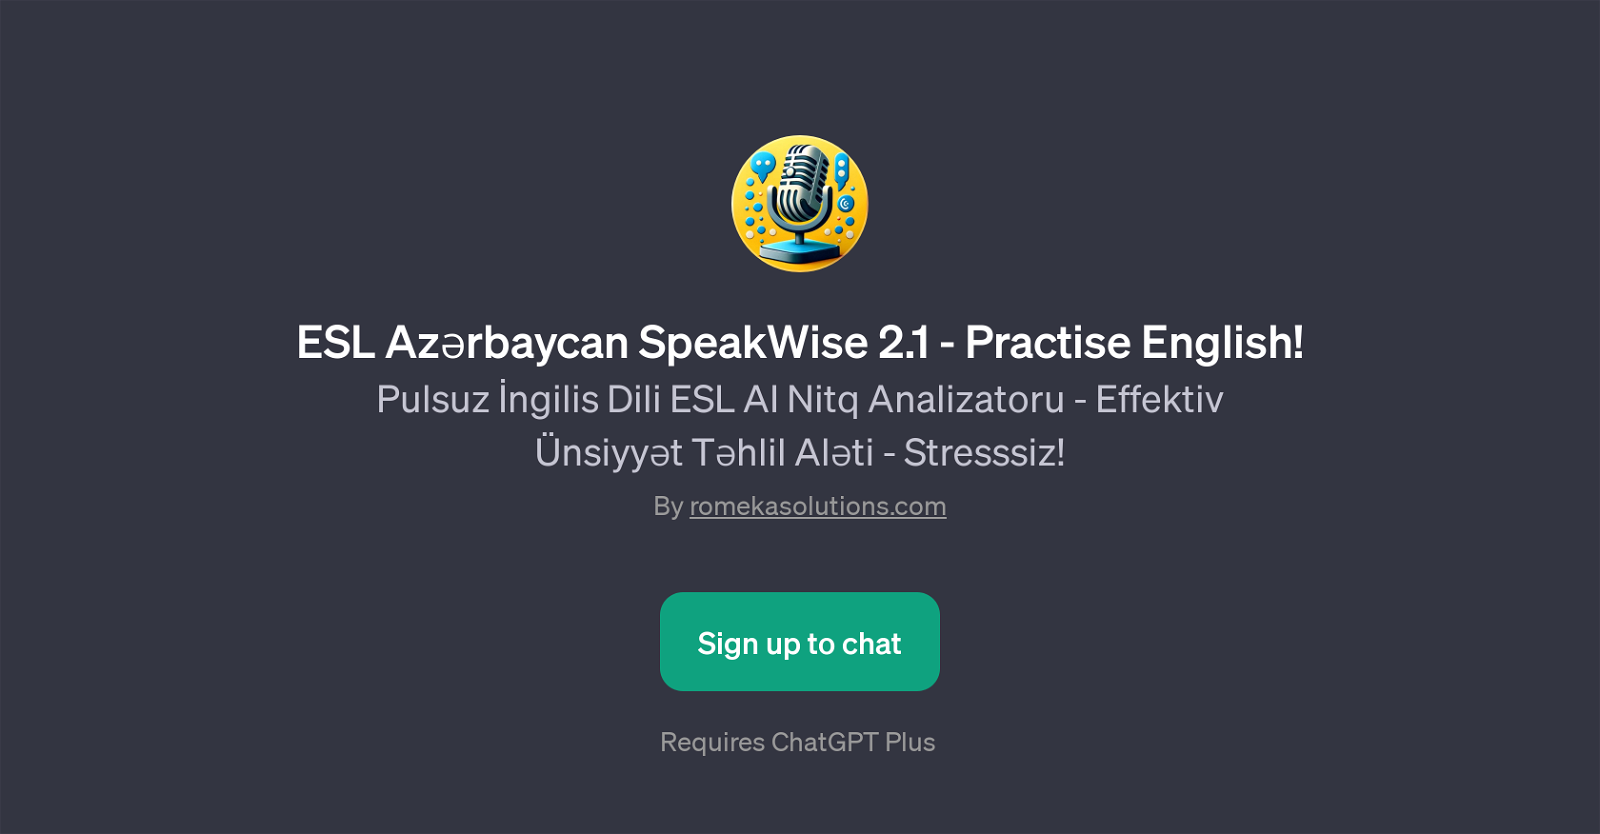 ESL Azrbaycan SpeakWise 2.1 website